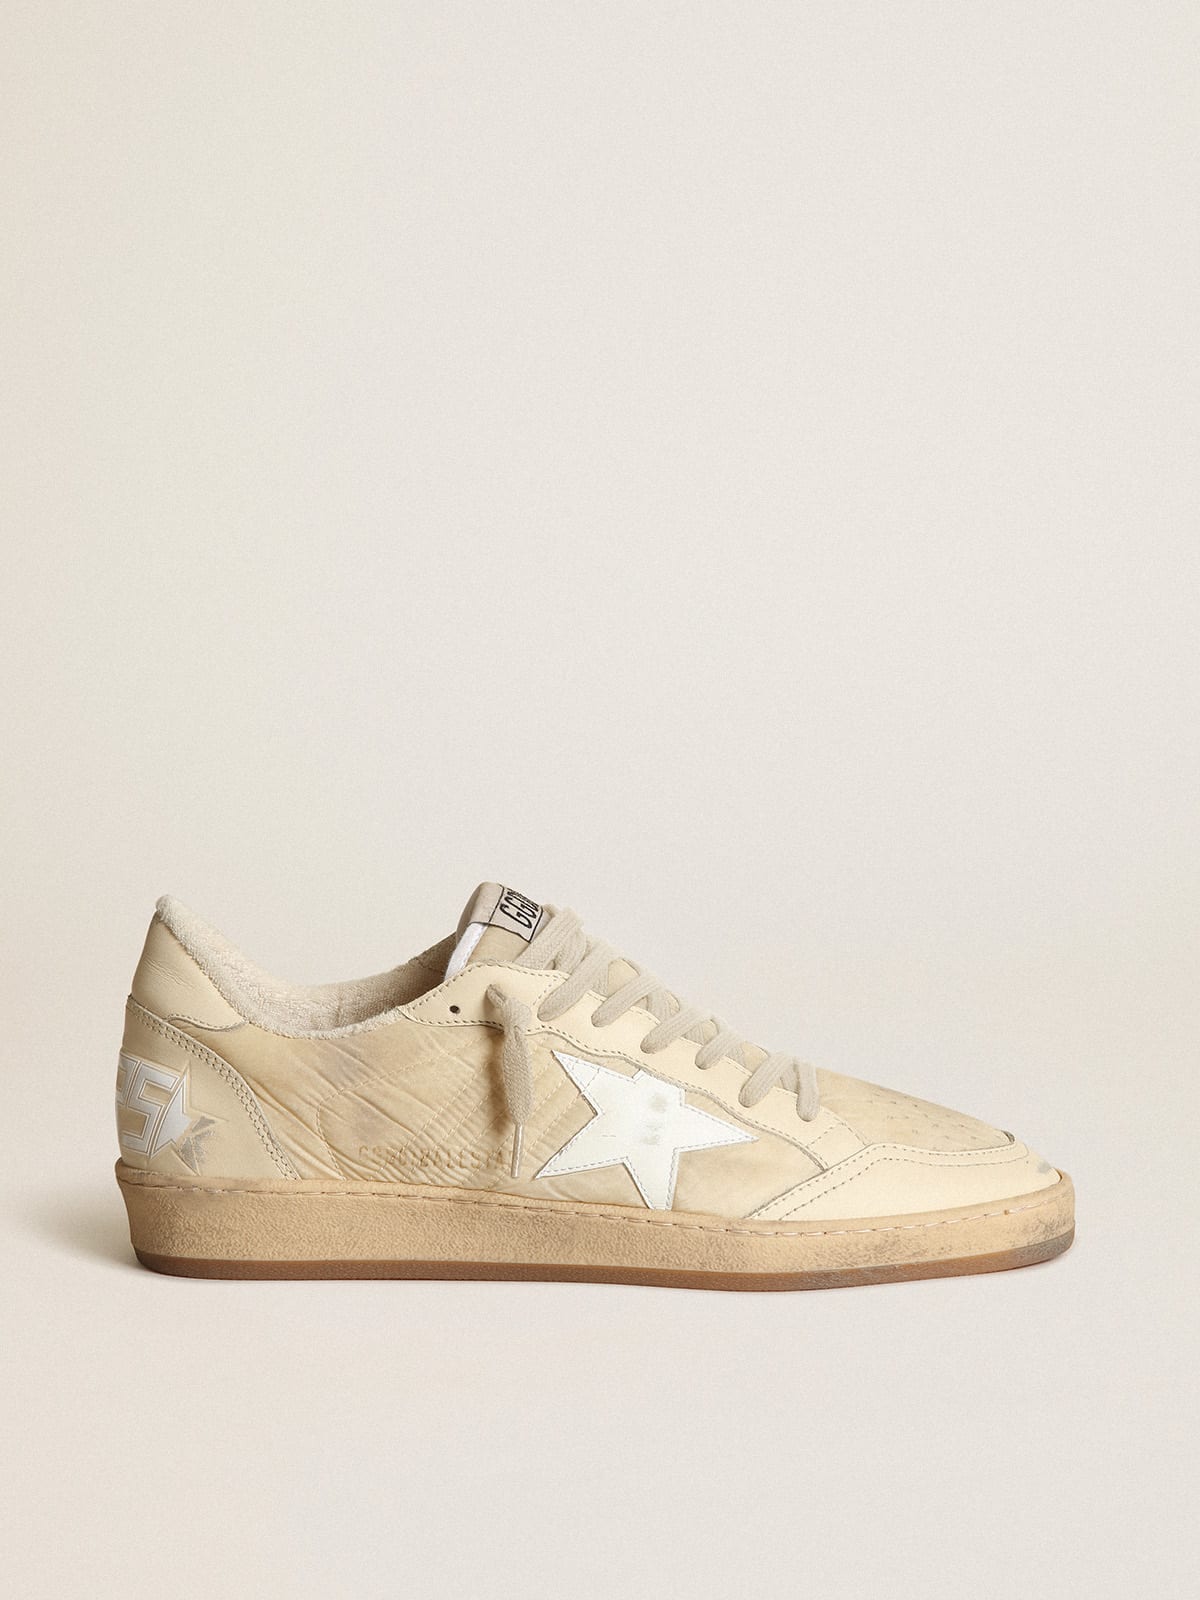 Men's Ball Star sneakers in milk-white nylon with white leather star and milk-white leather heel tab